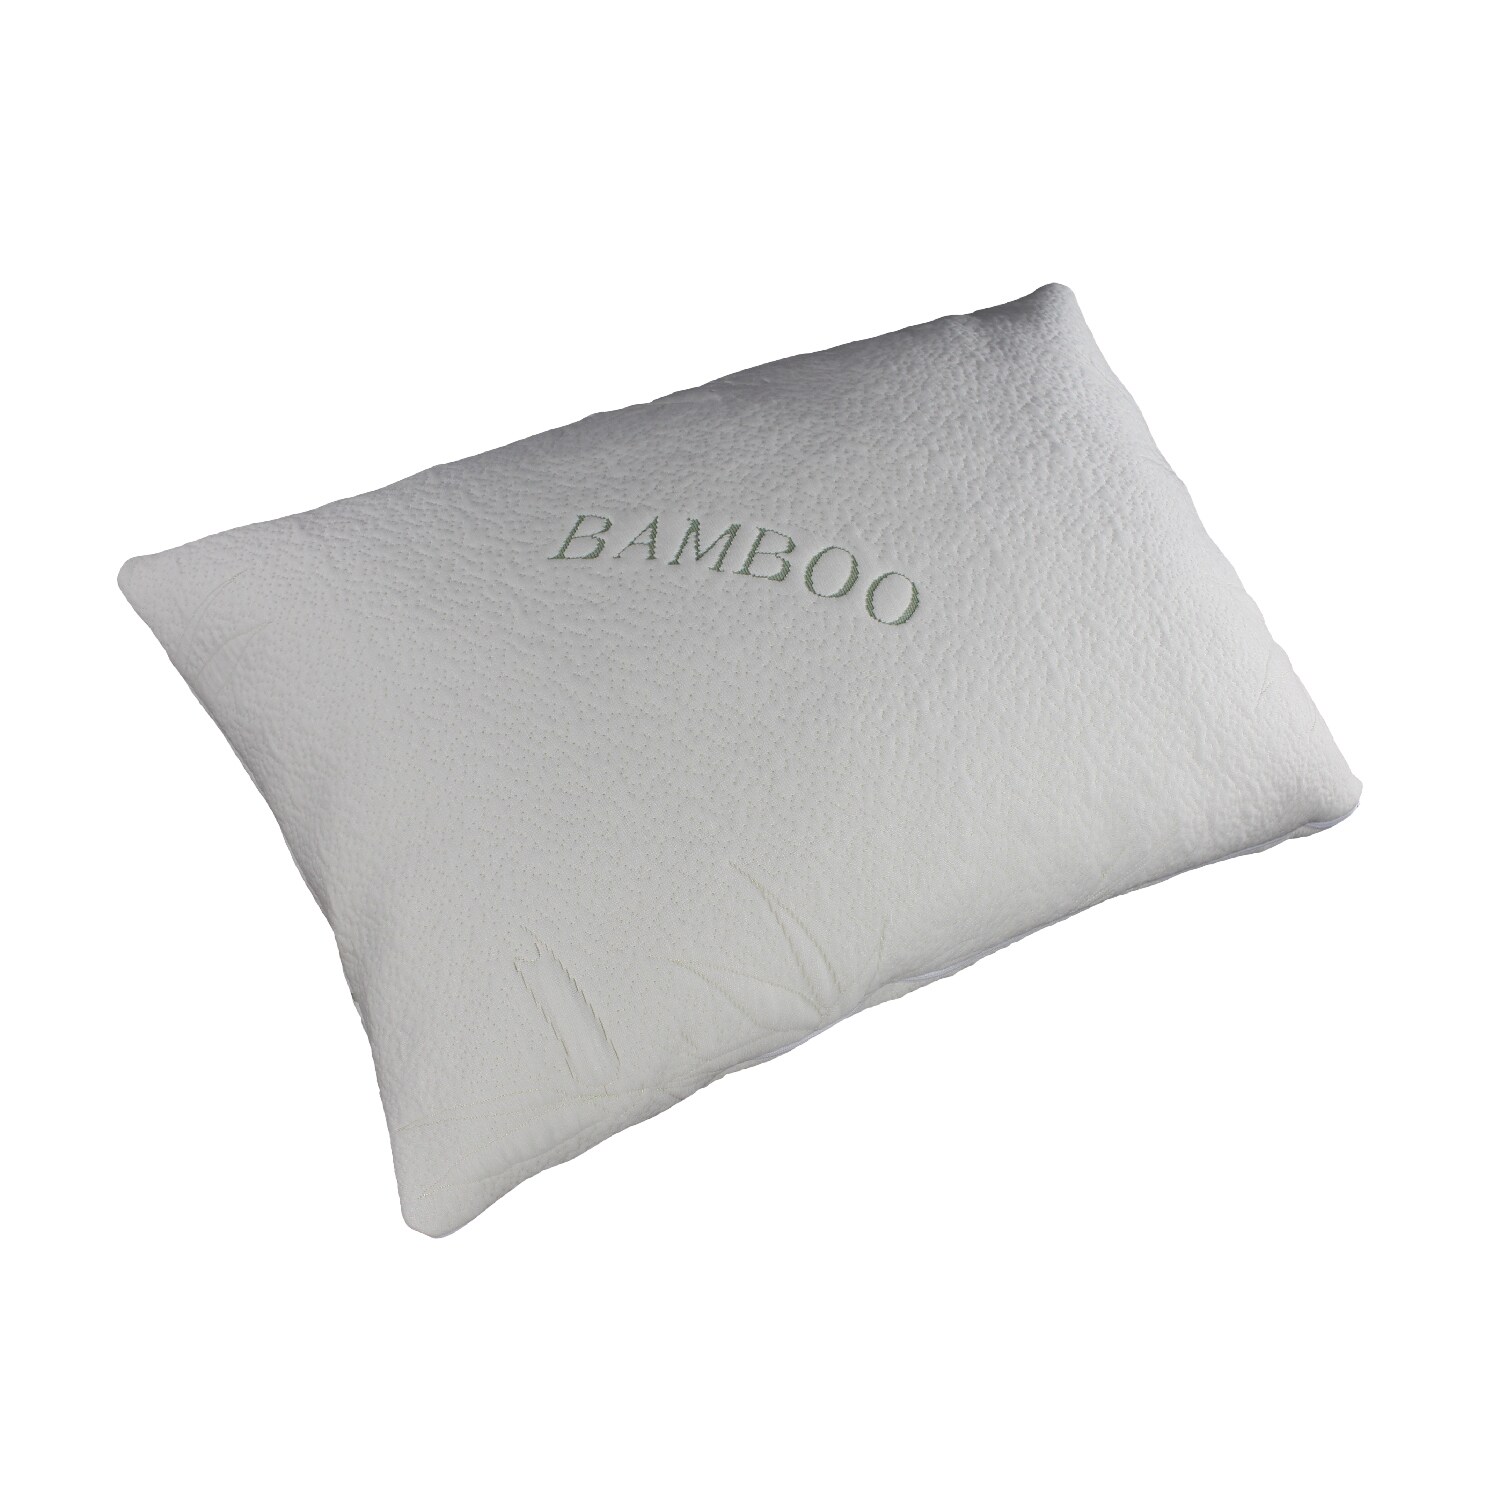 sinomax polyurethane foam pillow